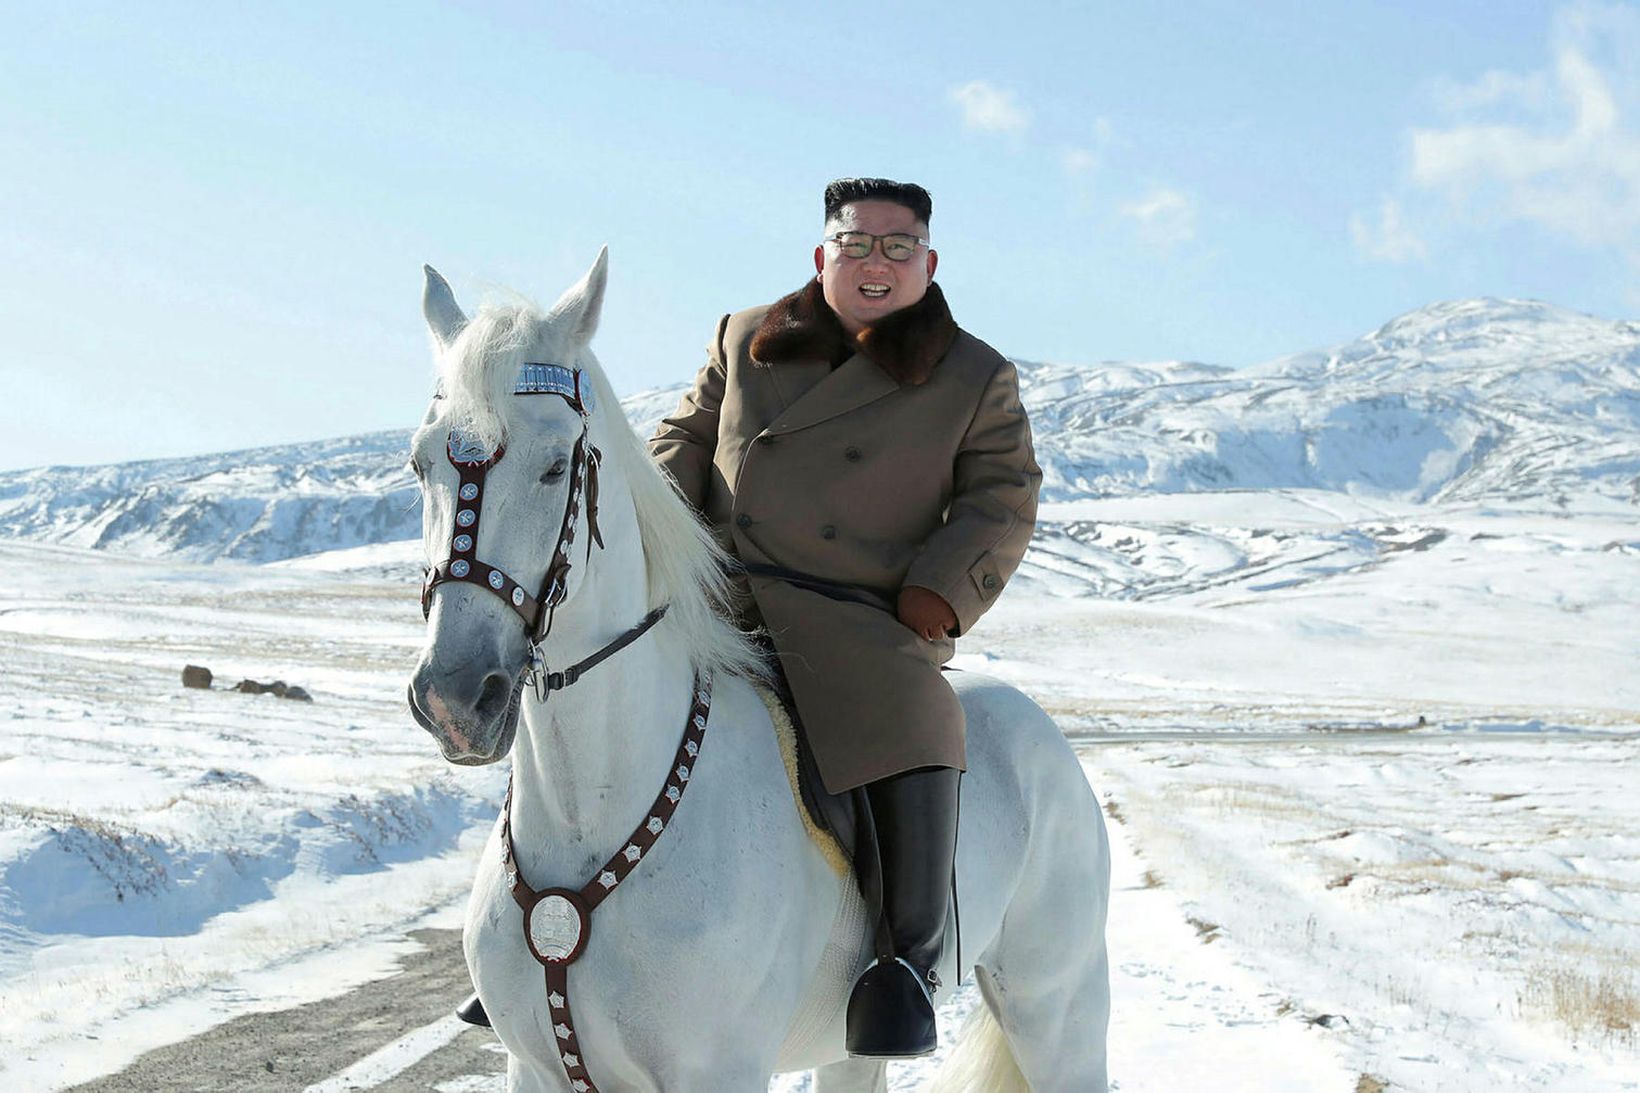 Kim Jong-un á hvítum hesti á snæviþaktri jörð.